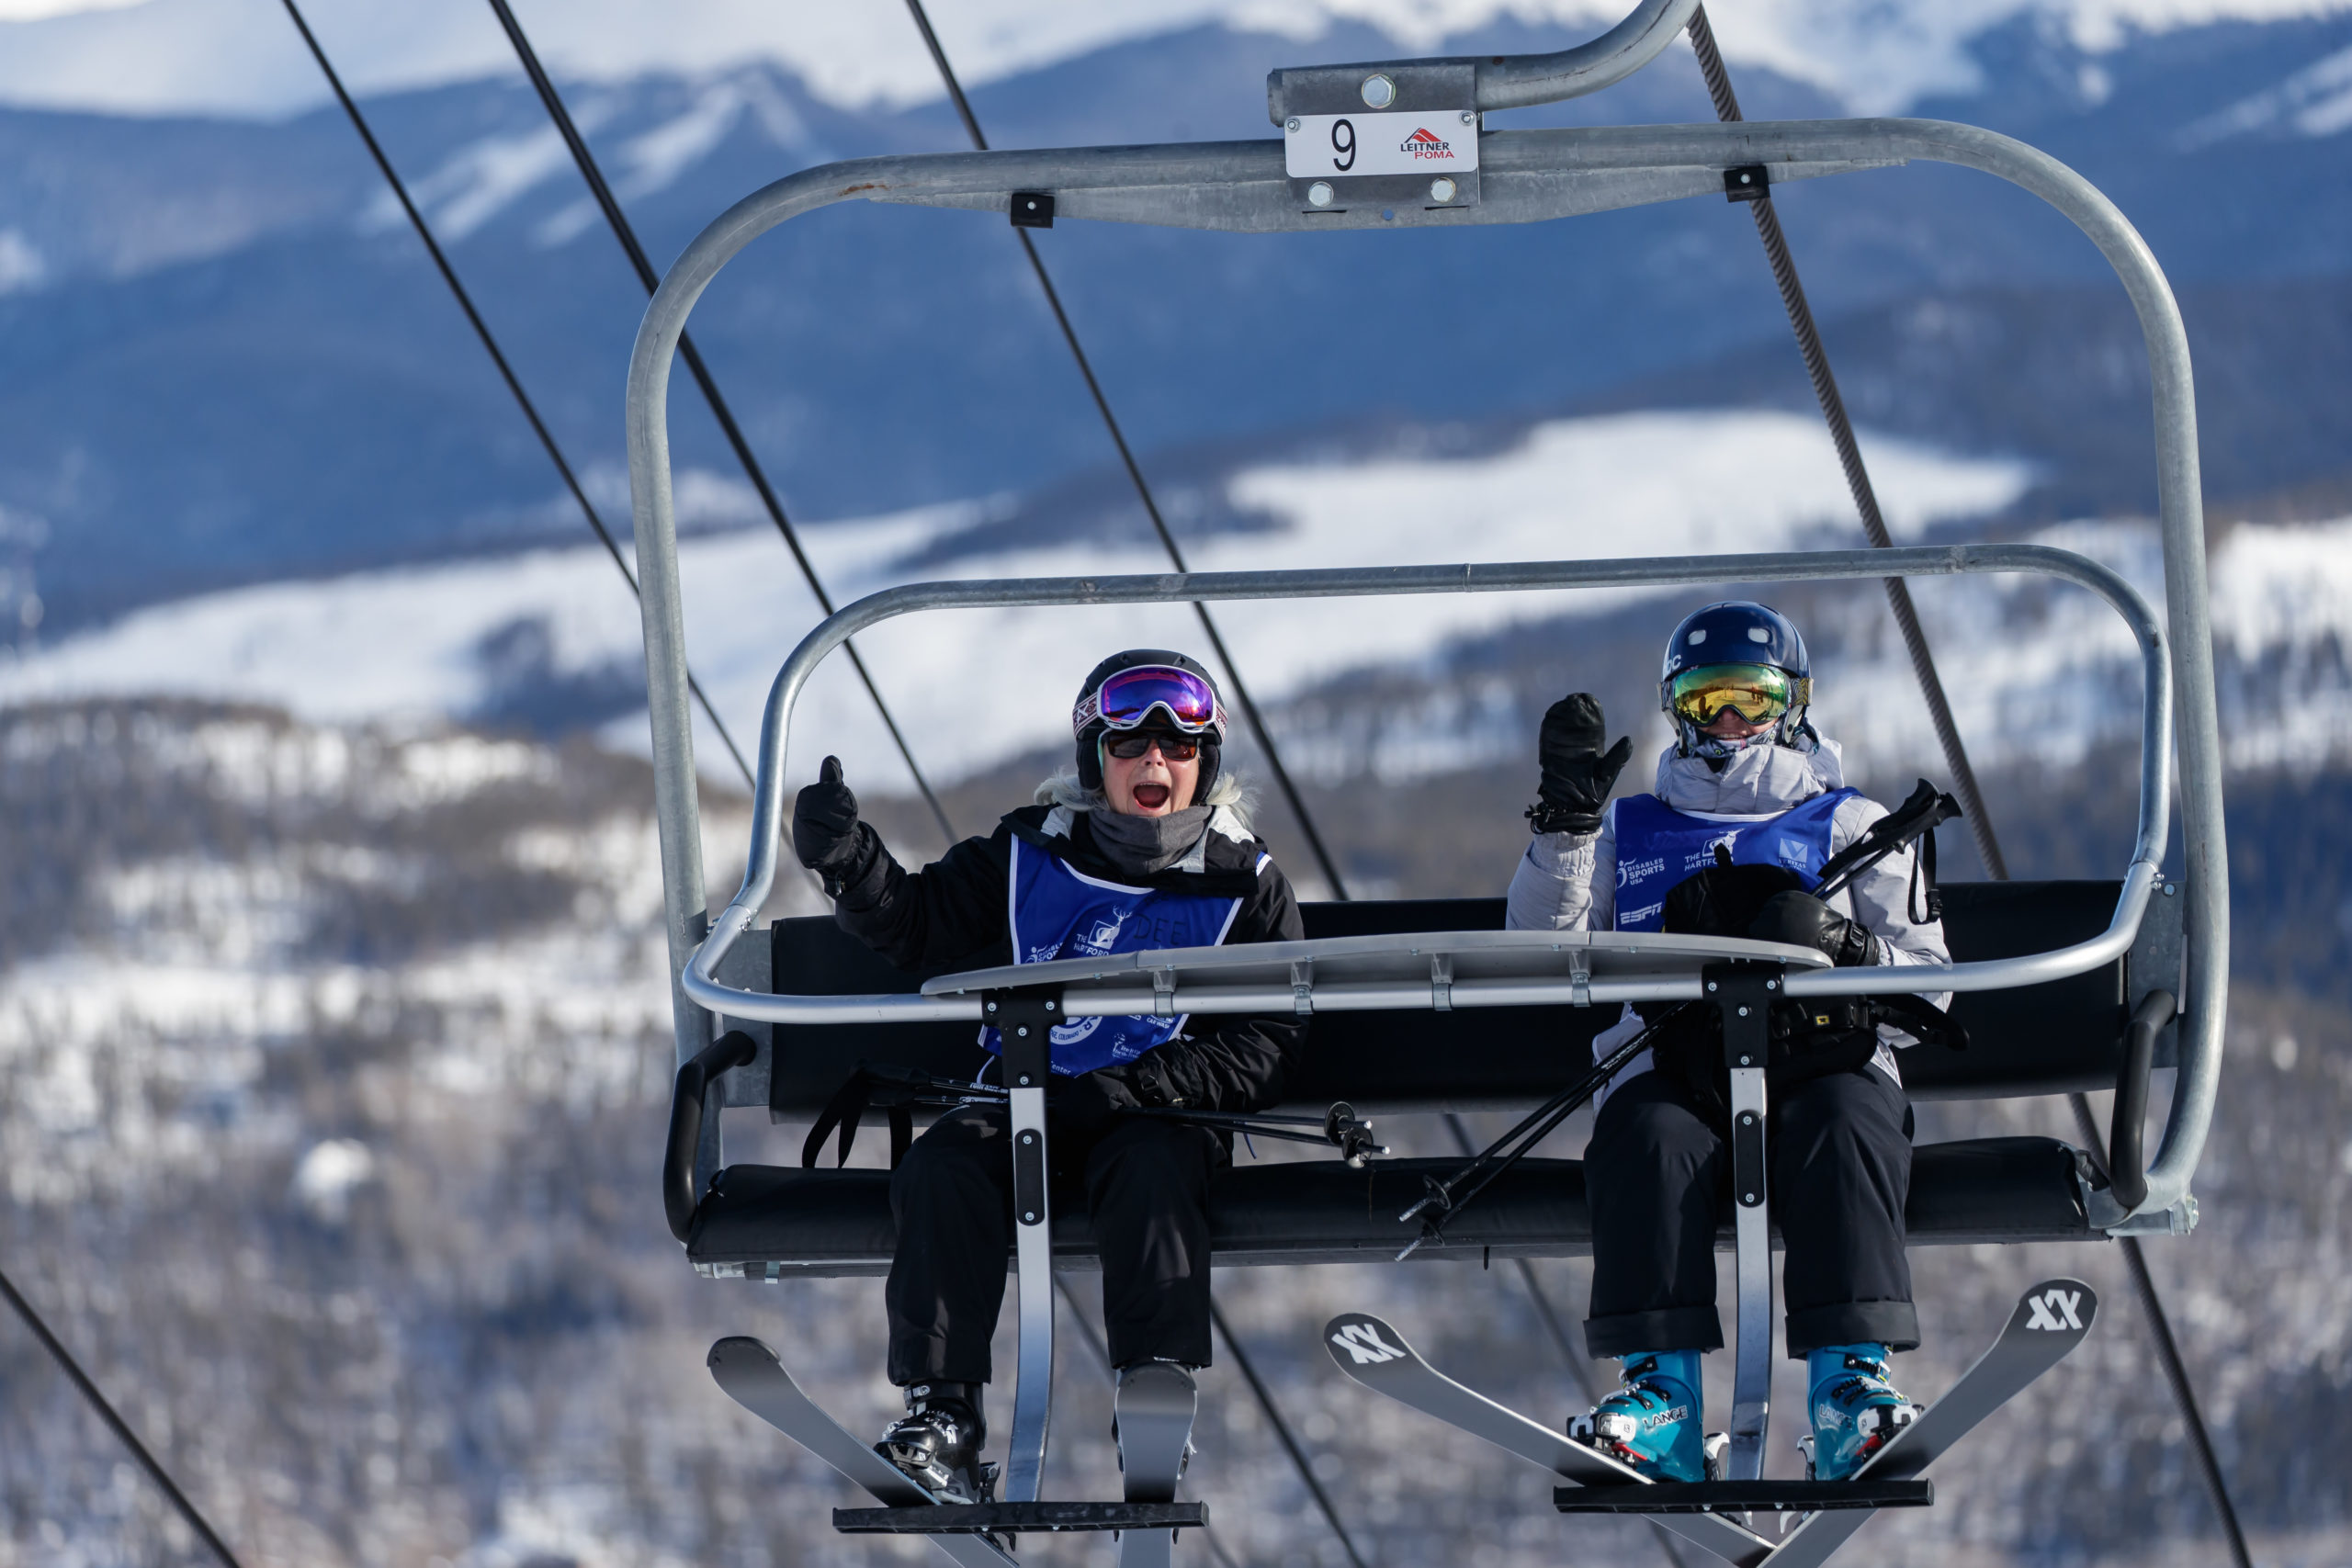 Two Ski Spec participants riding the Breckenridge Ski Resort lift and waving to the camera